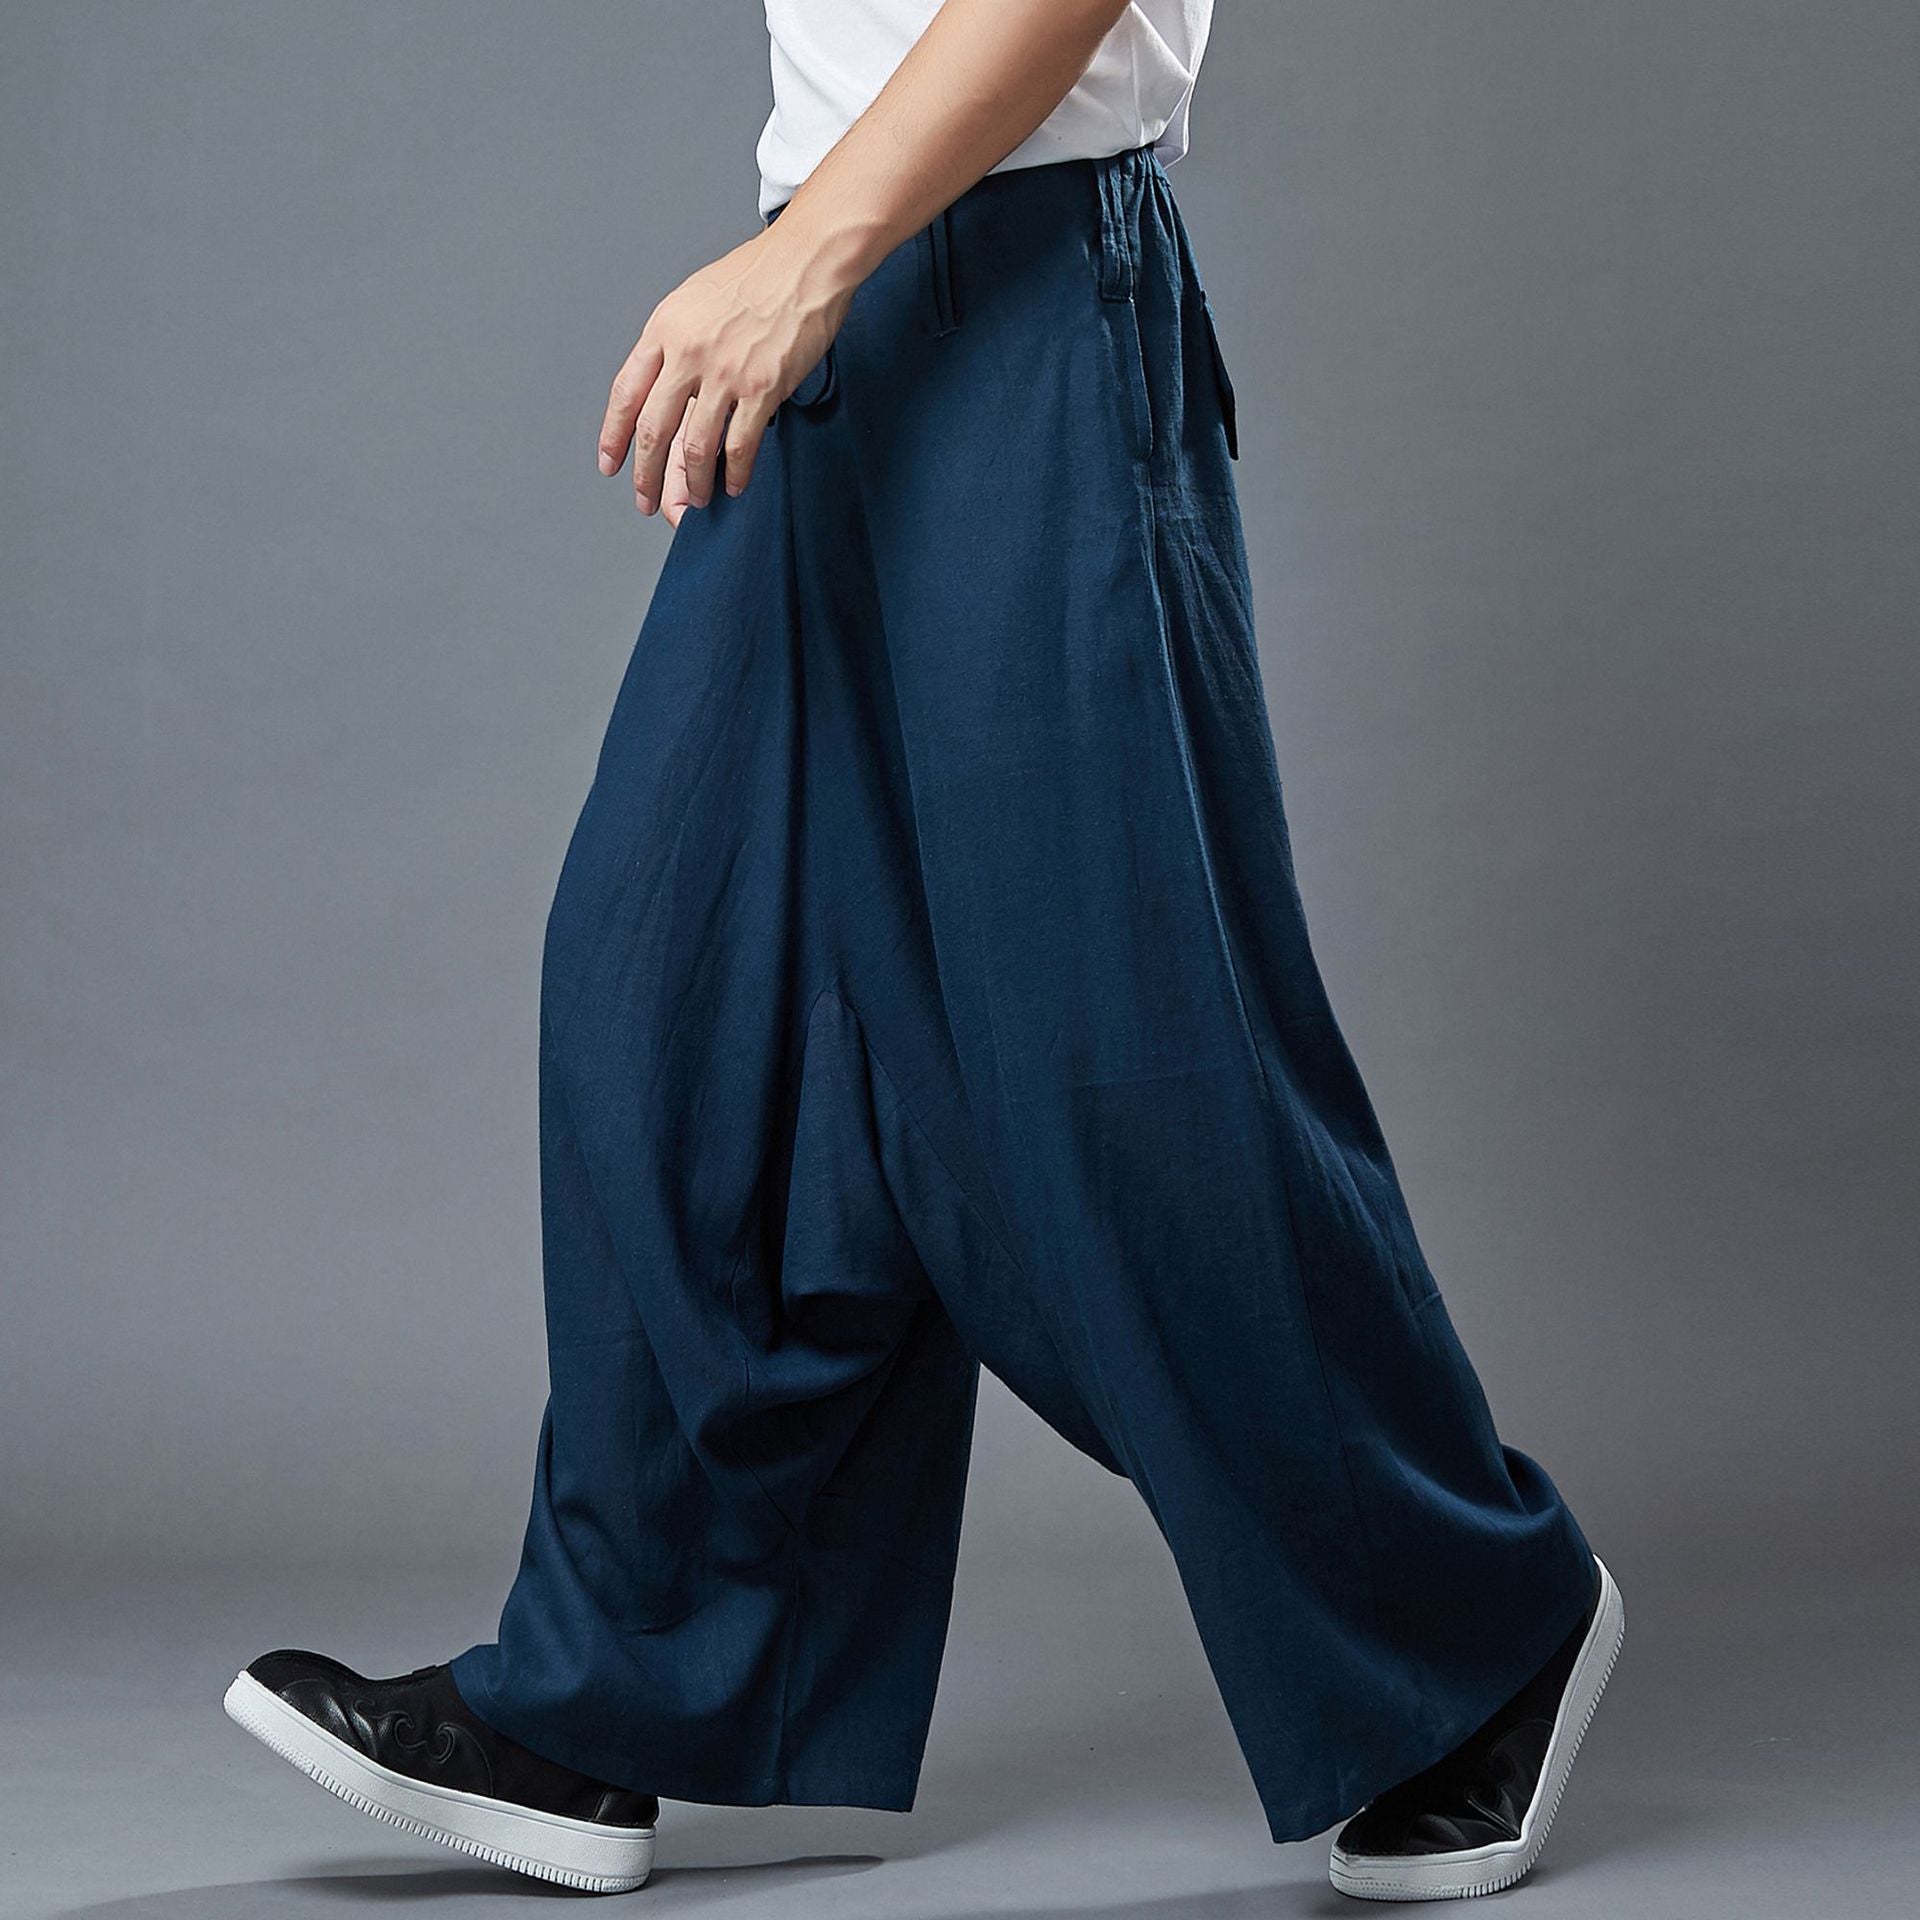 Lululemon's Push to Get Men to Wear Yoga Pants | by John McDermott | MEL  Magazine | Medium